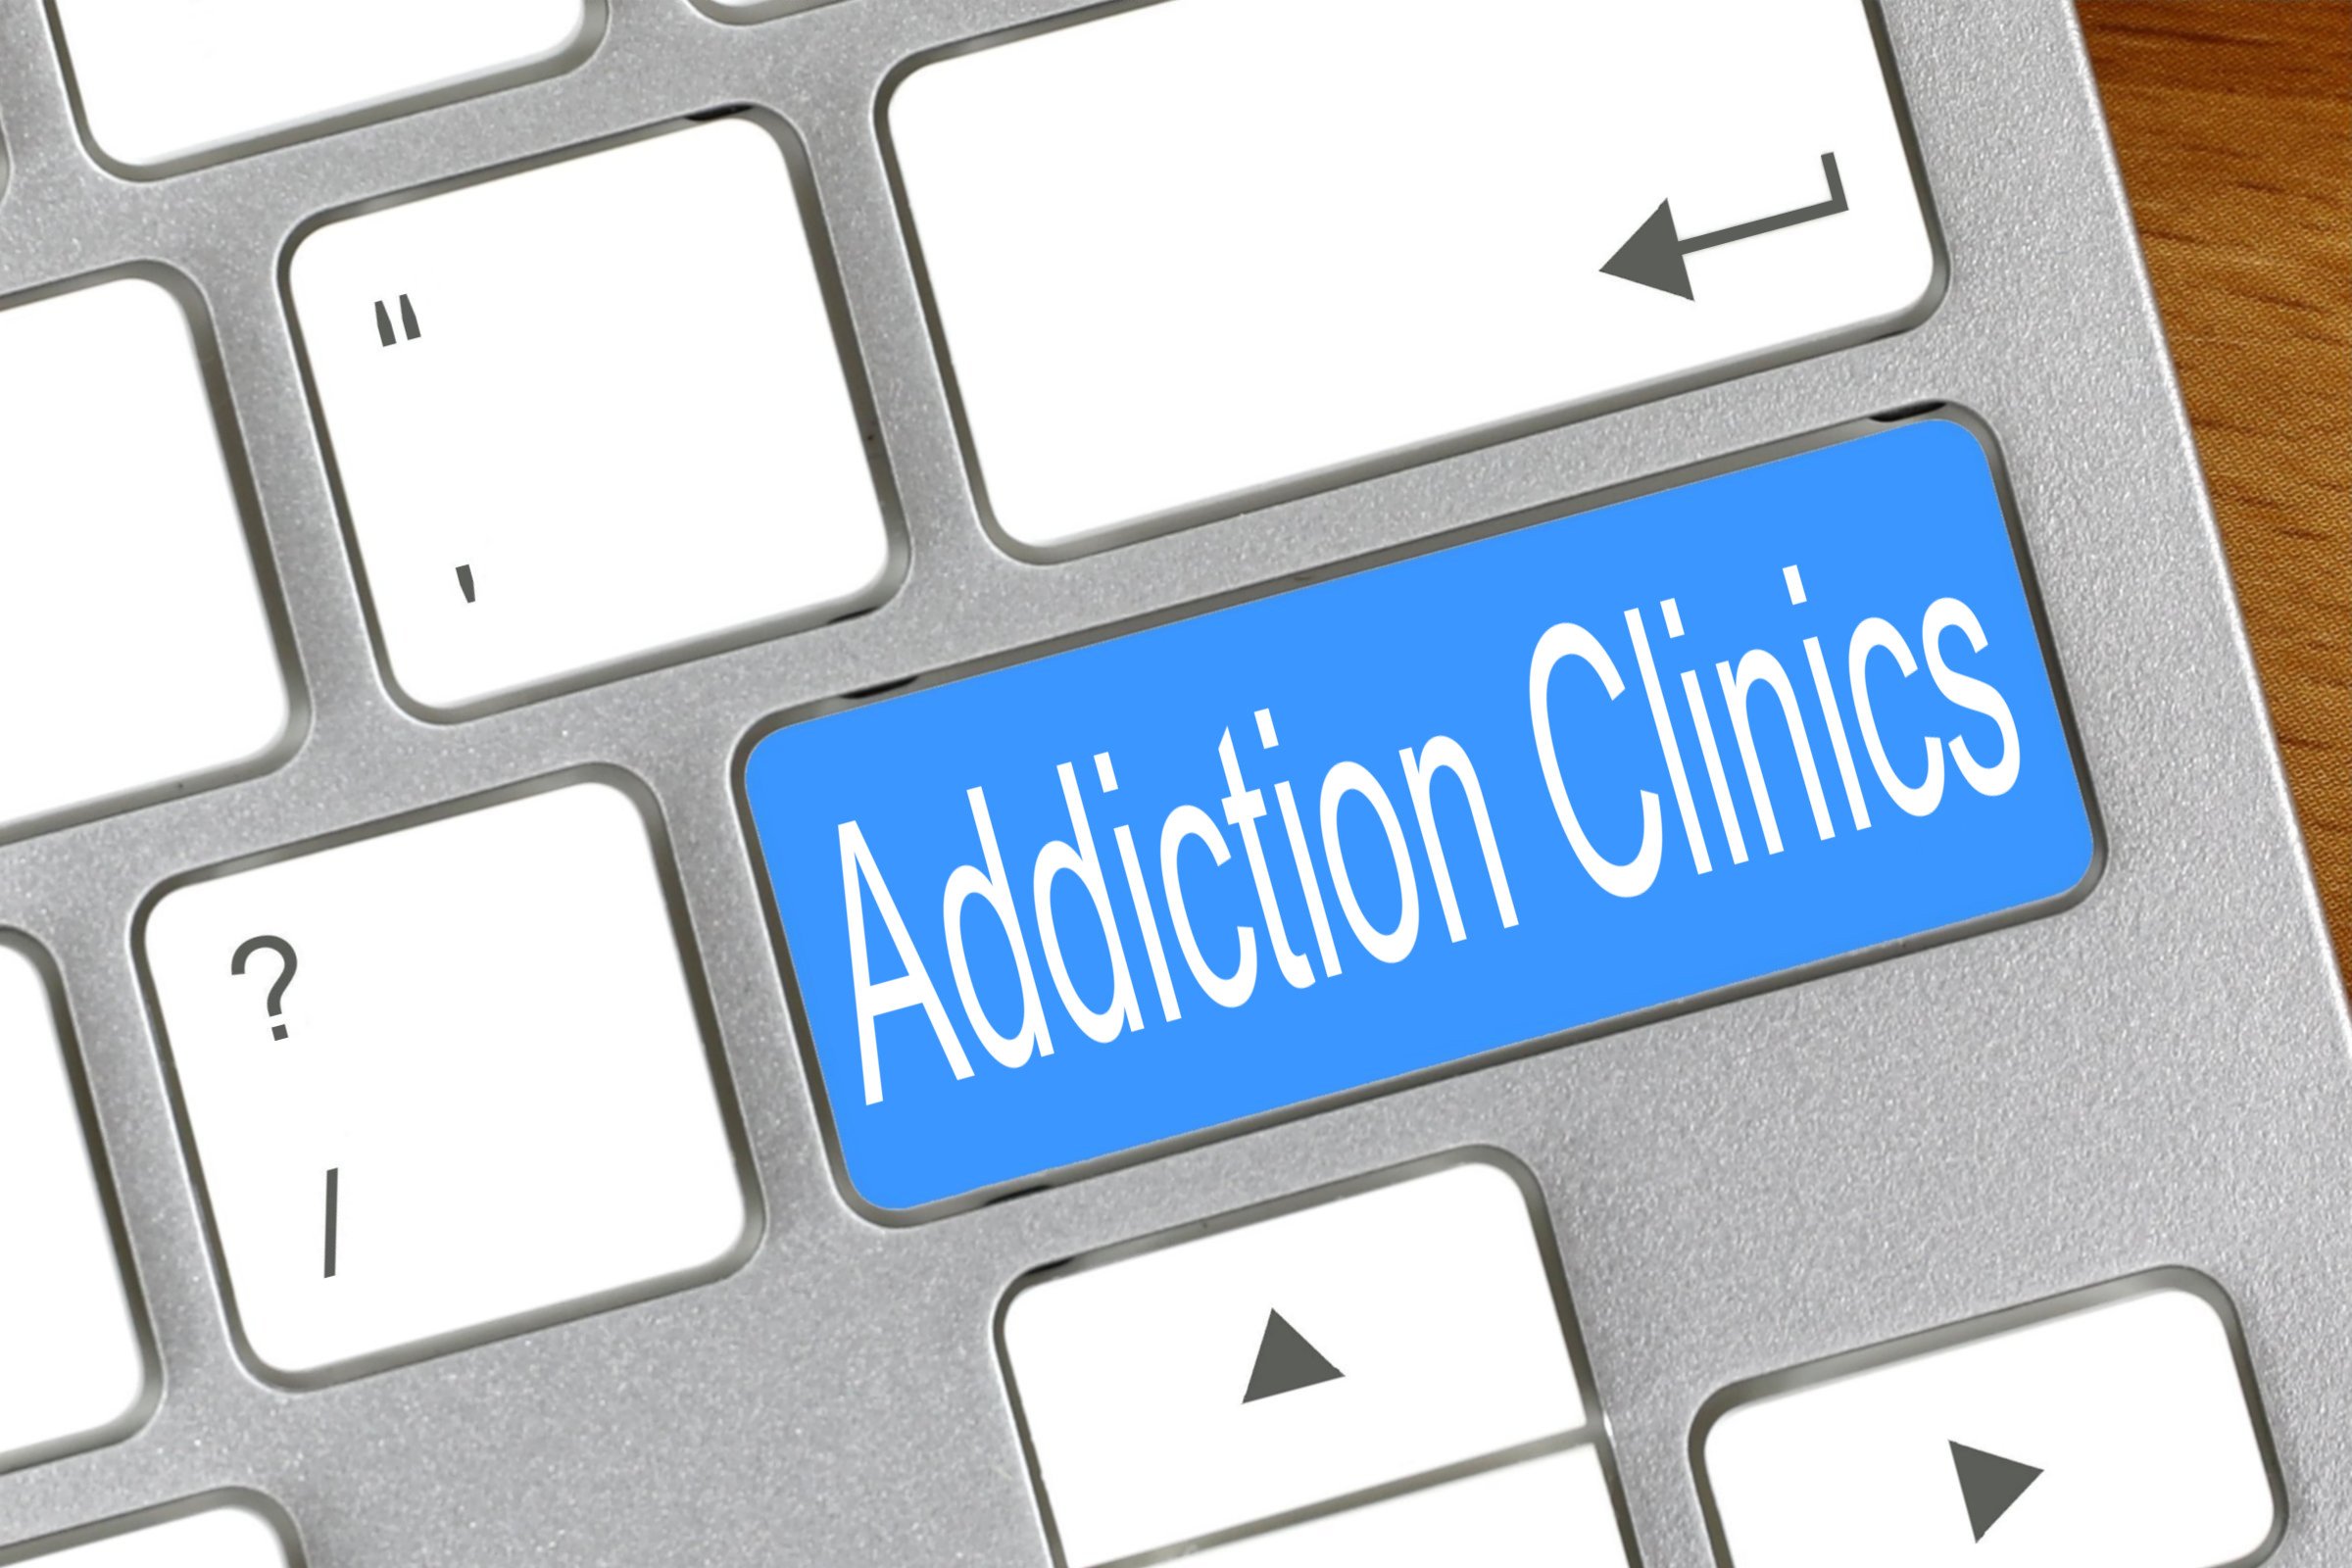 addiction clinics